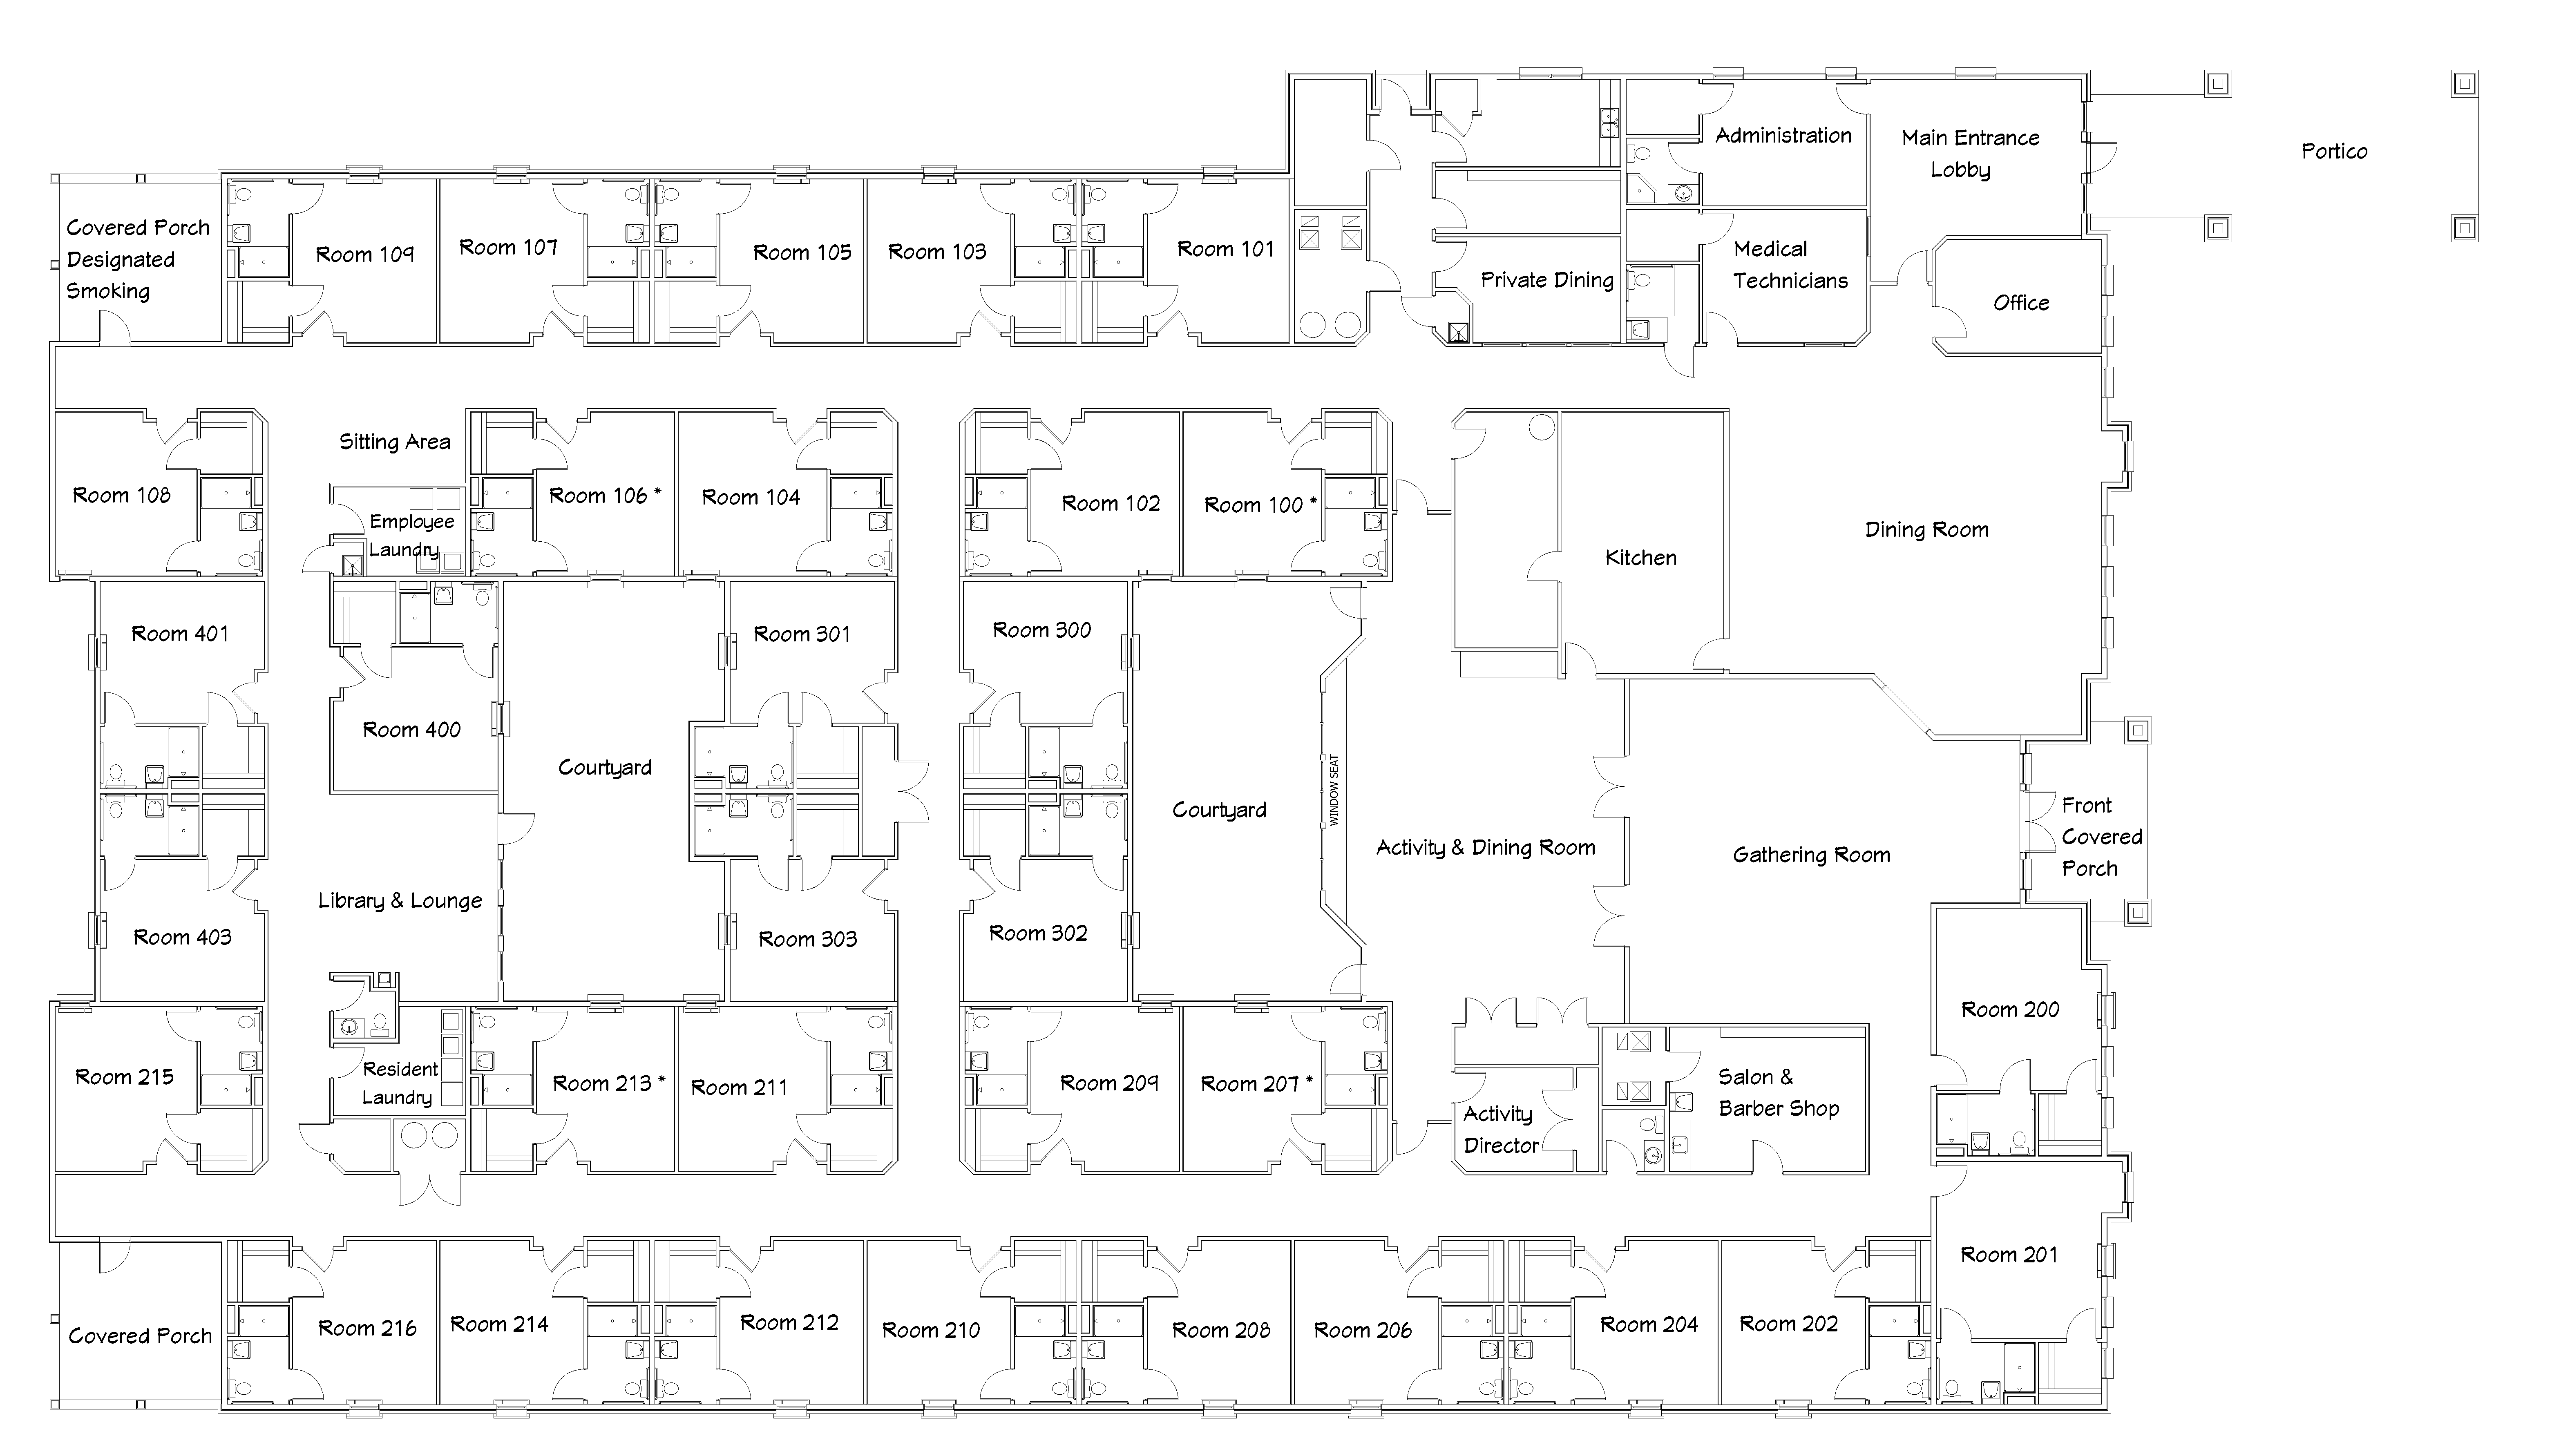 Floor Plan with Room Numbers